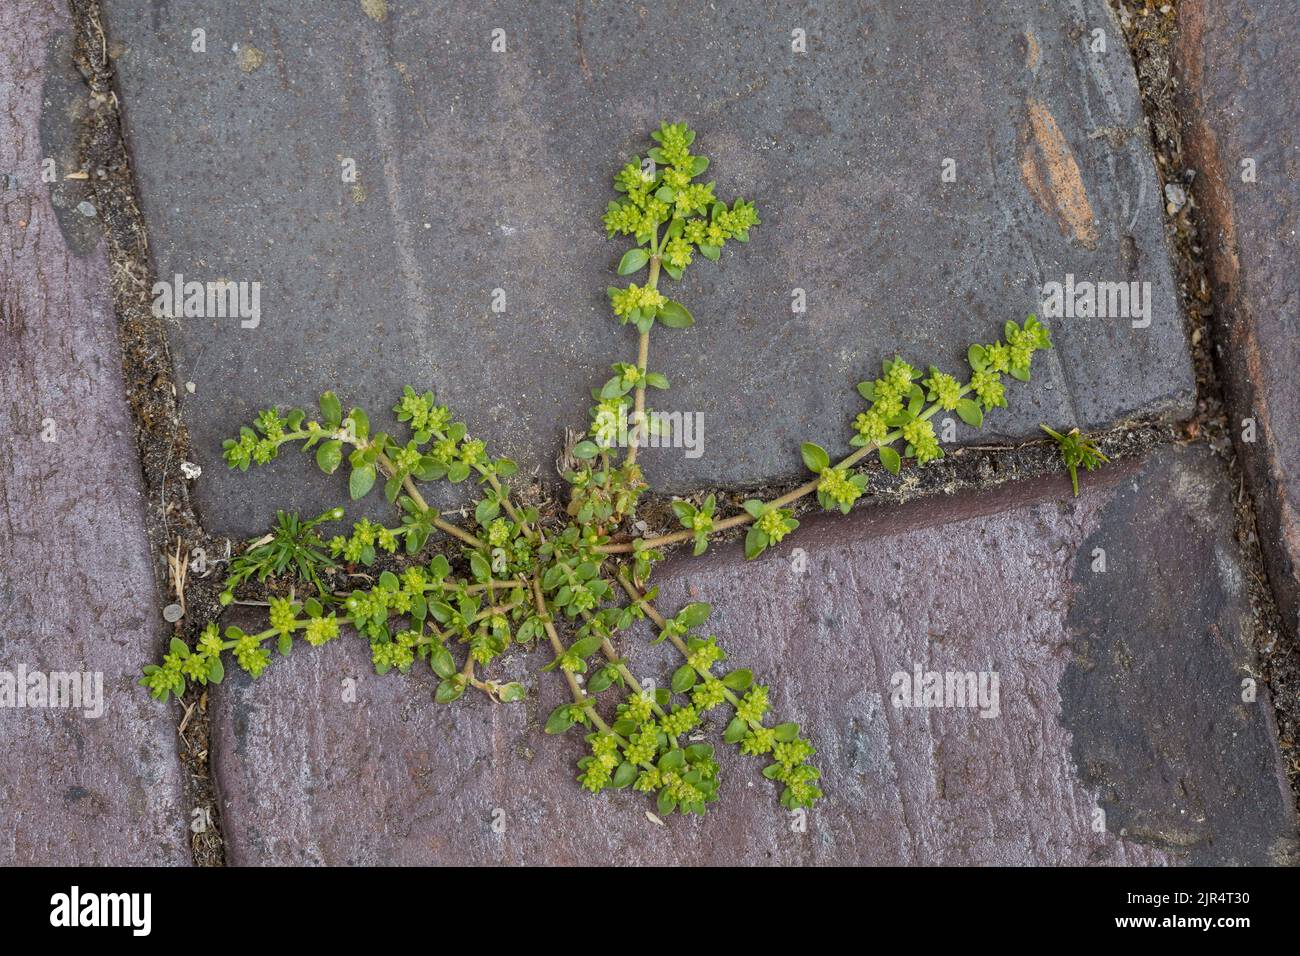 Smooth rupturewort, Smooth burstwort (Herniaria glabra), grows in paving gap, Germany Stock Photo